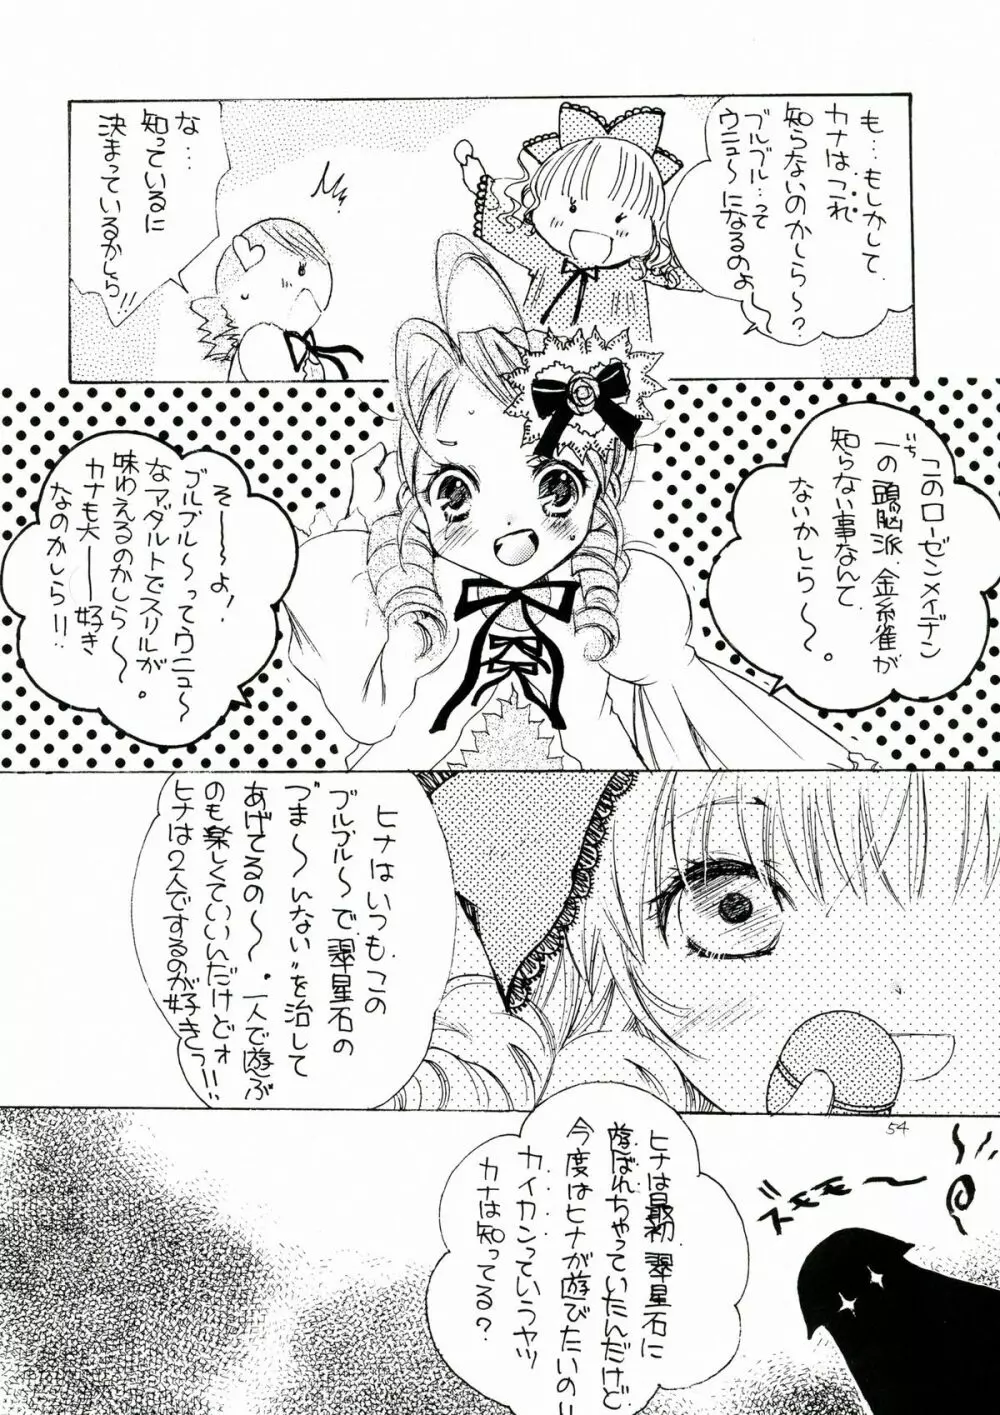 薔薇乙女。桃色日記 - page54